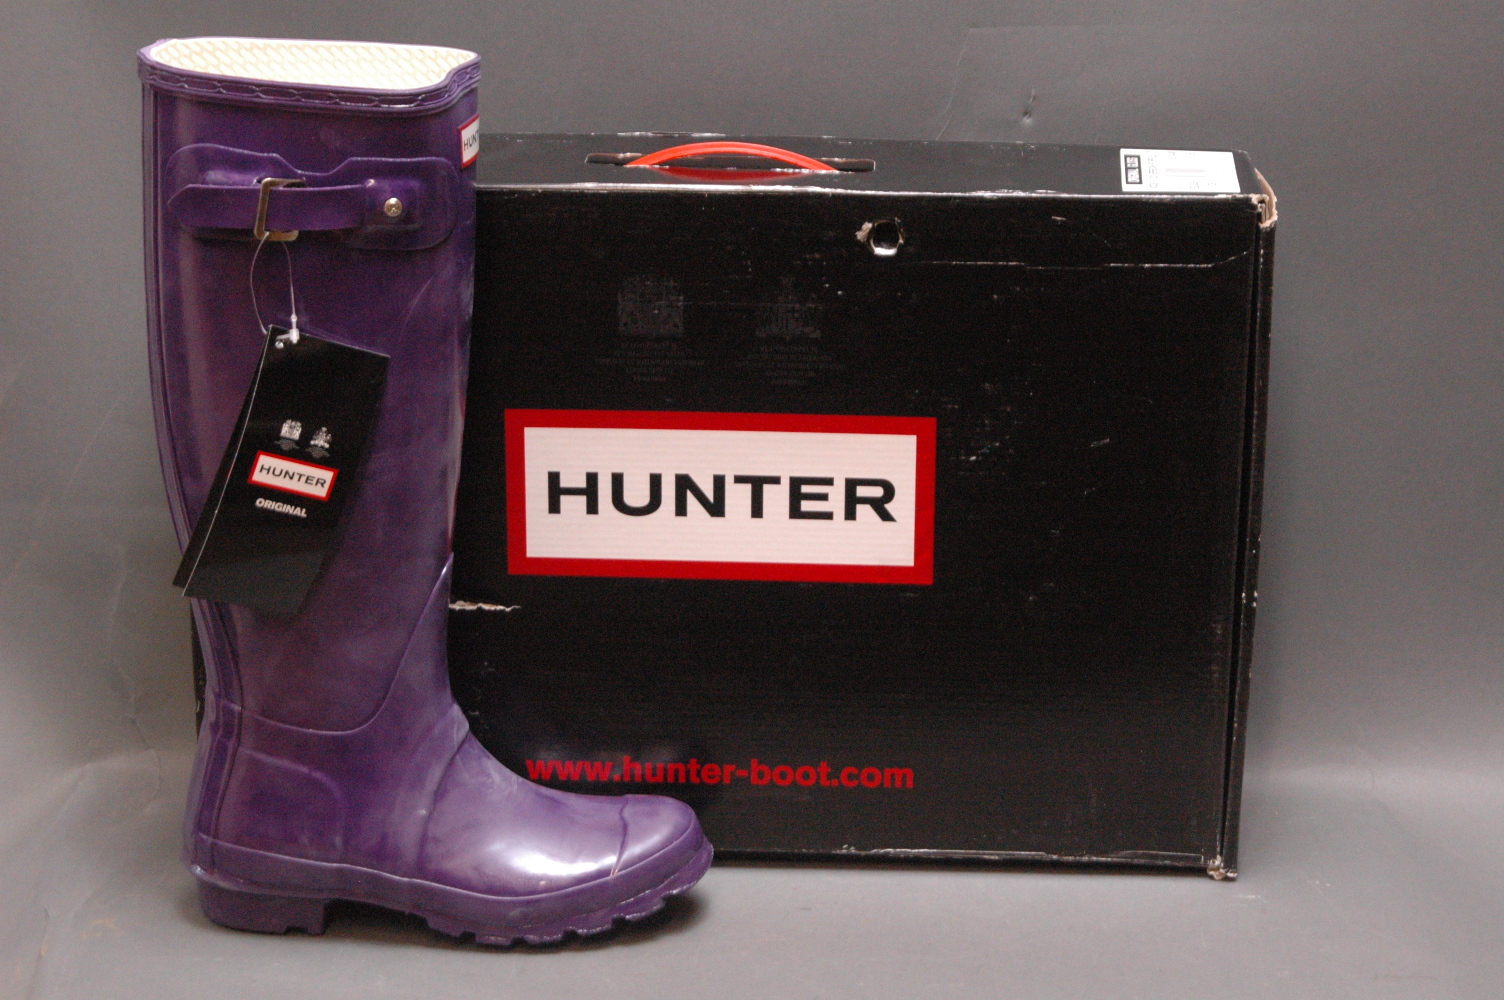 Pair of Hunter ladies tall wellingtons, sovereign purple, (UK 3) new.